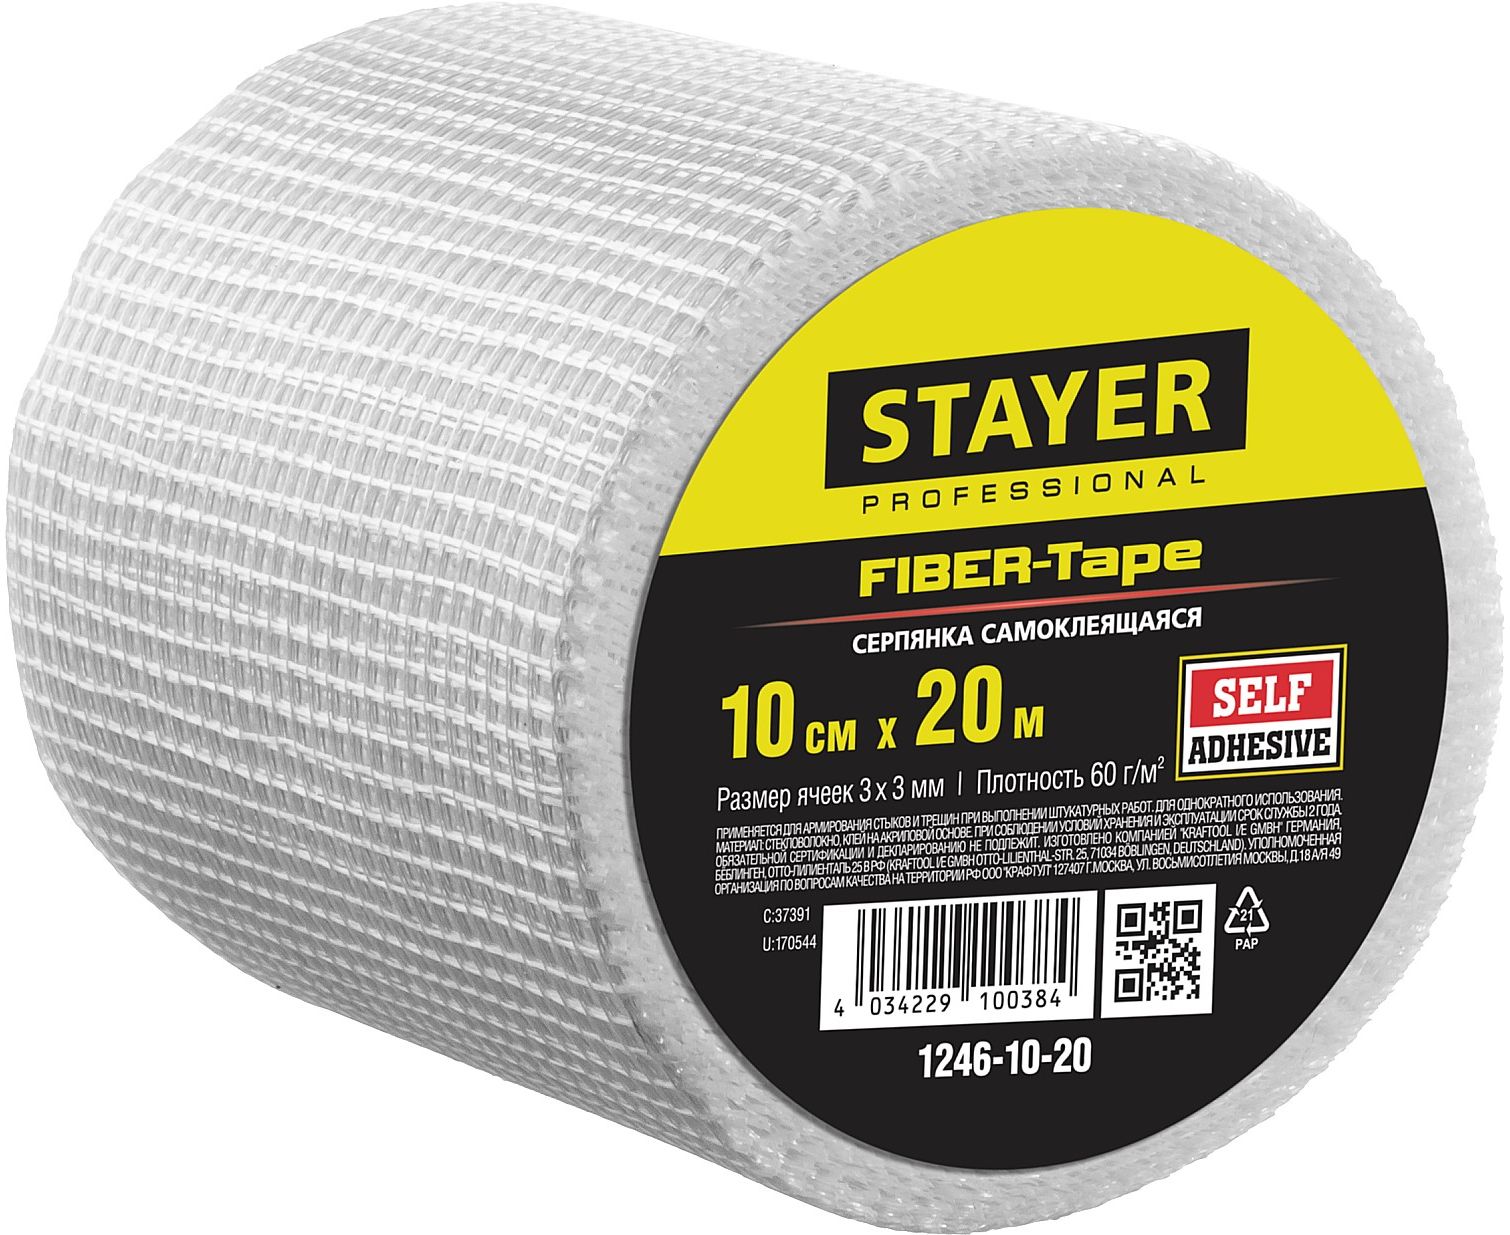 Серпянка самоклеящаяся STAYER Professional FIBER-Tape, 10 см х 20м 1246-10-20 самоклеящаяся серпянка stayer